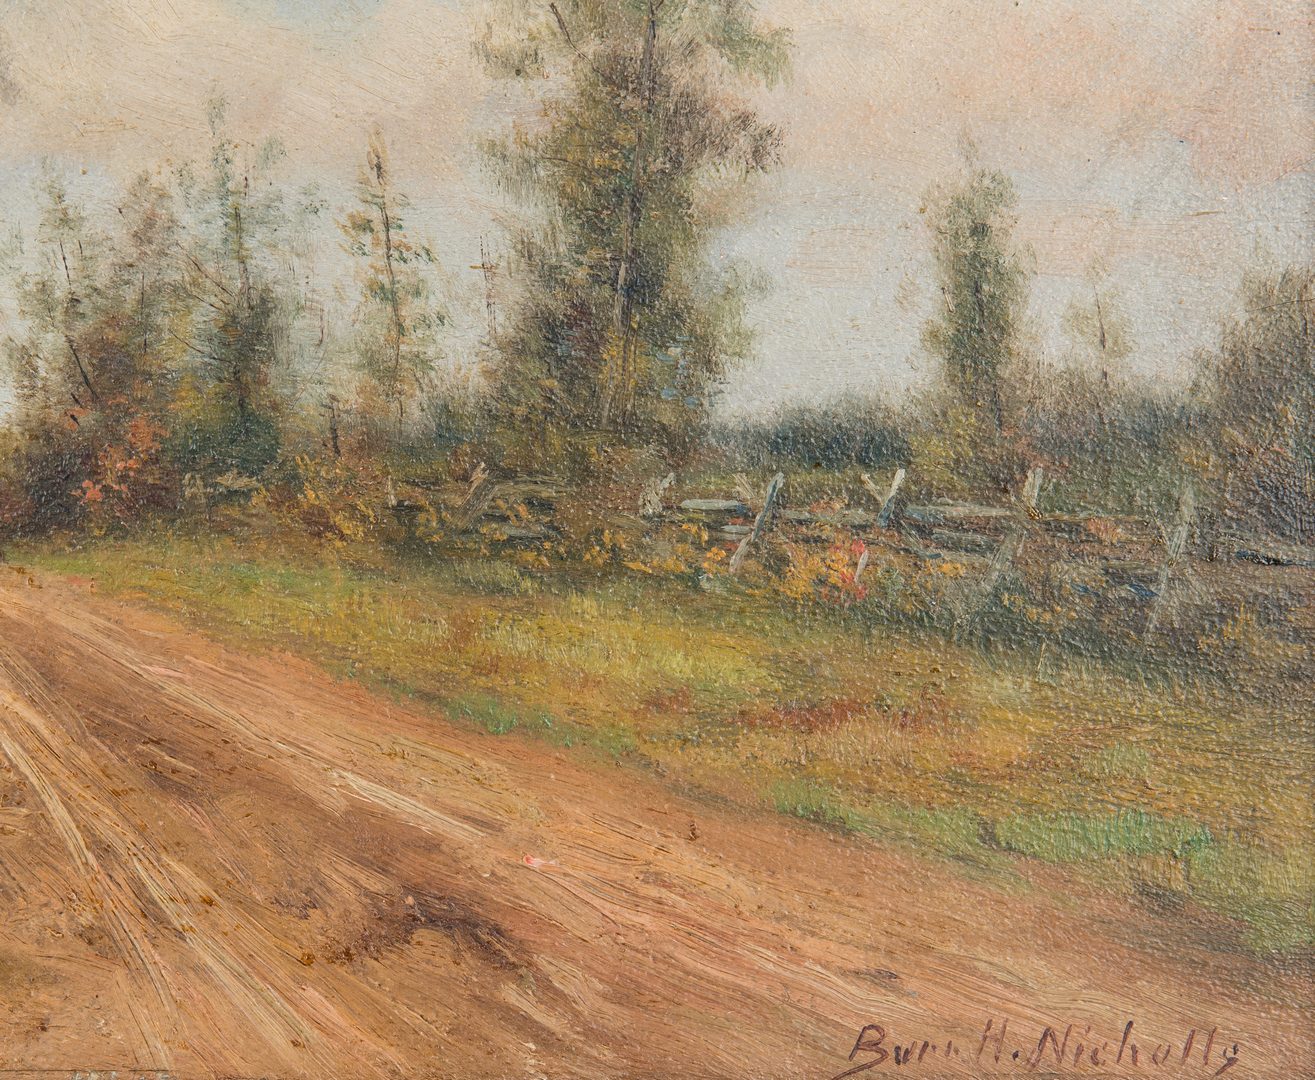 Lot 95: Burr H. Nicholls O/B, Country Road Landscape